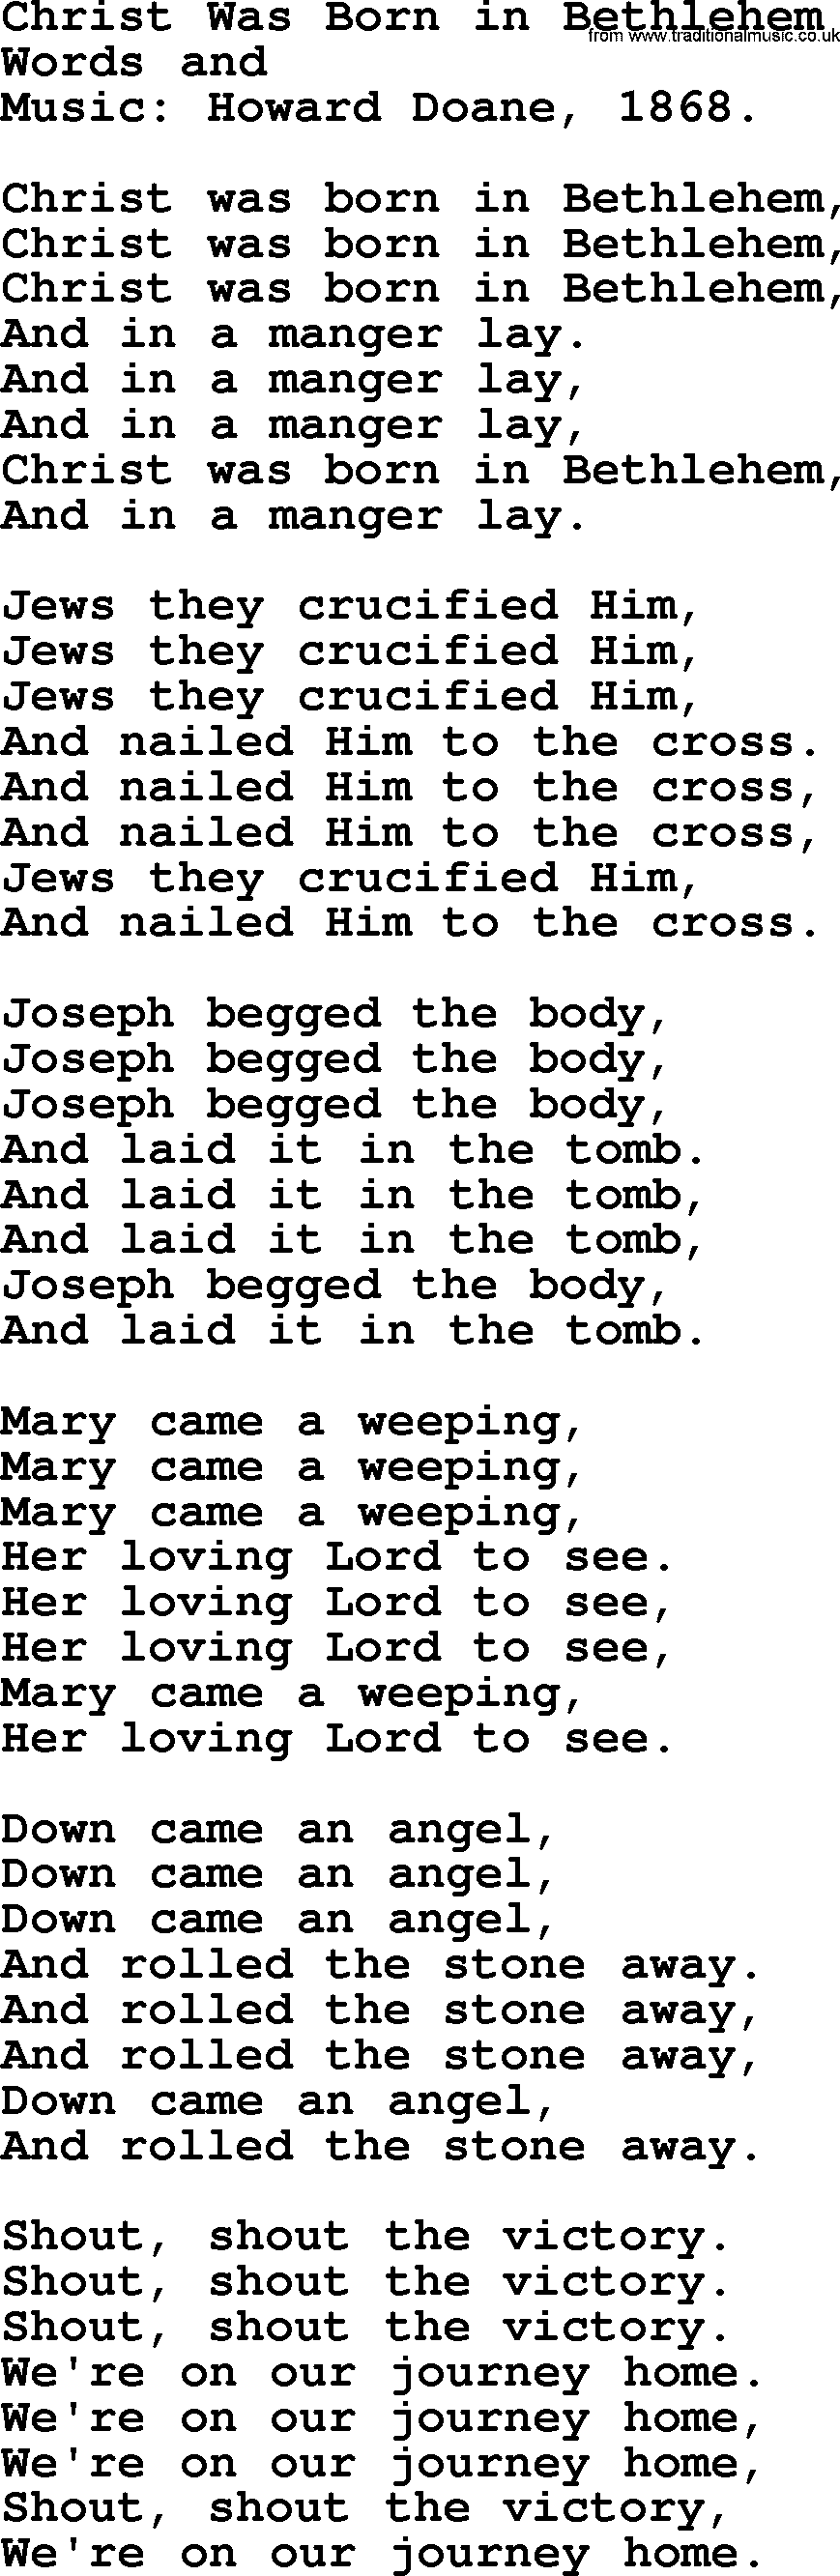 Christmas Hymns, Carols and Songs, title: Christ Was Born In Bethlehem, lyrics with PDF